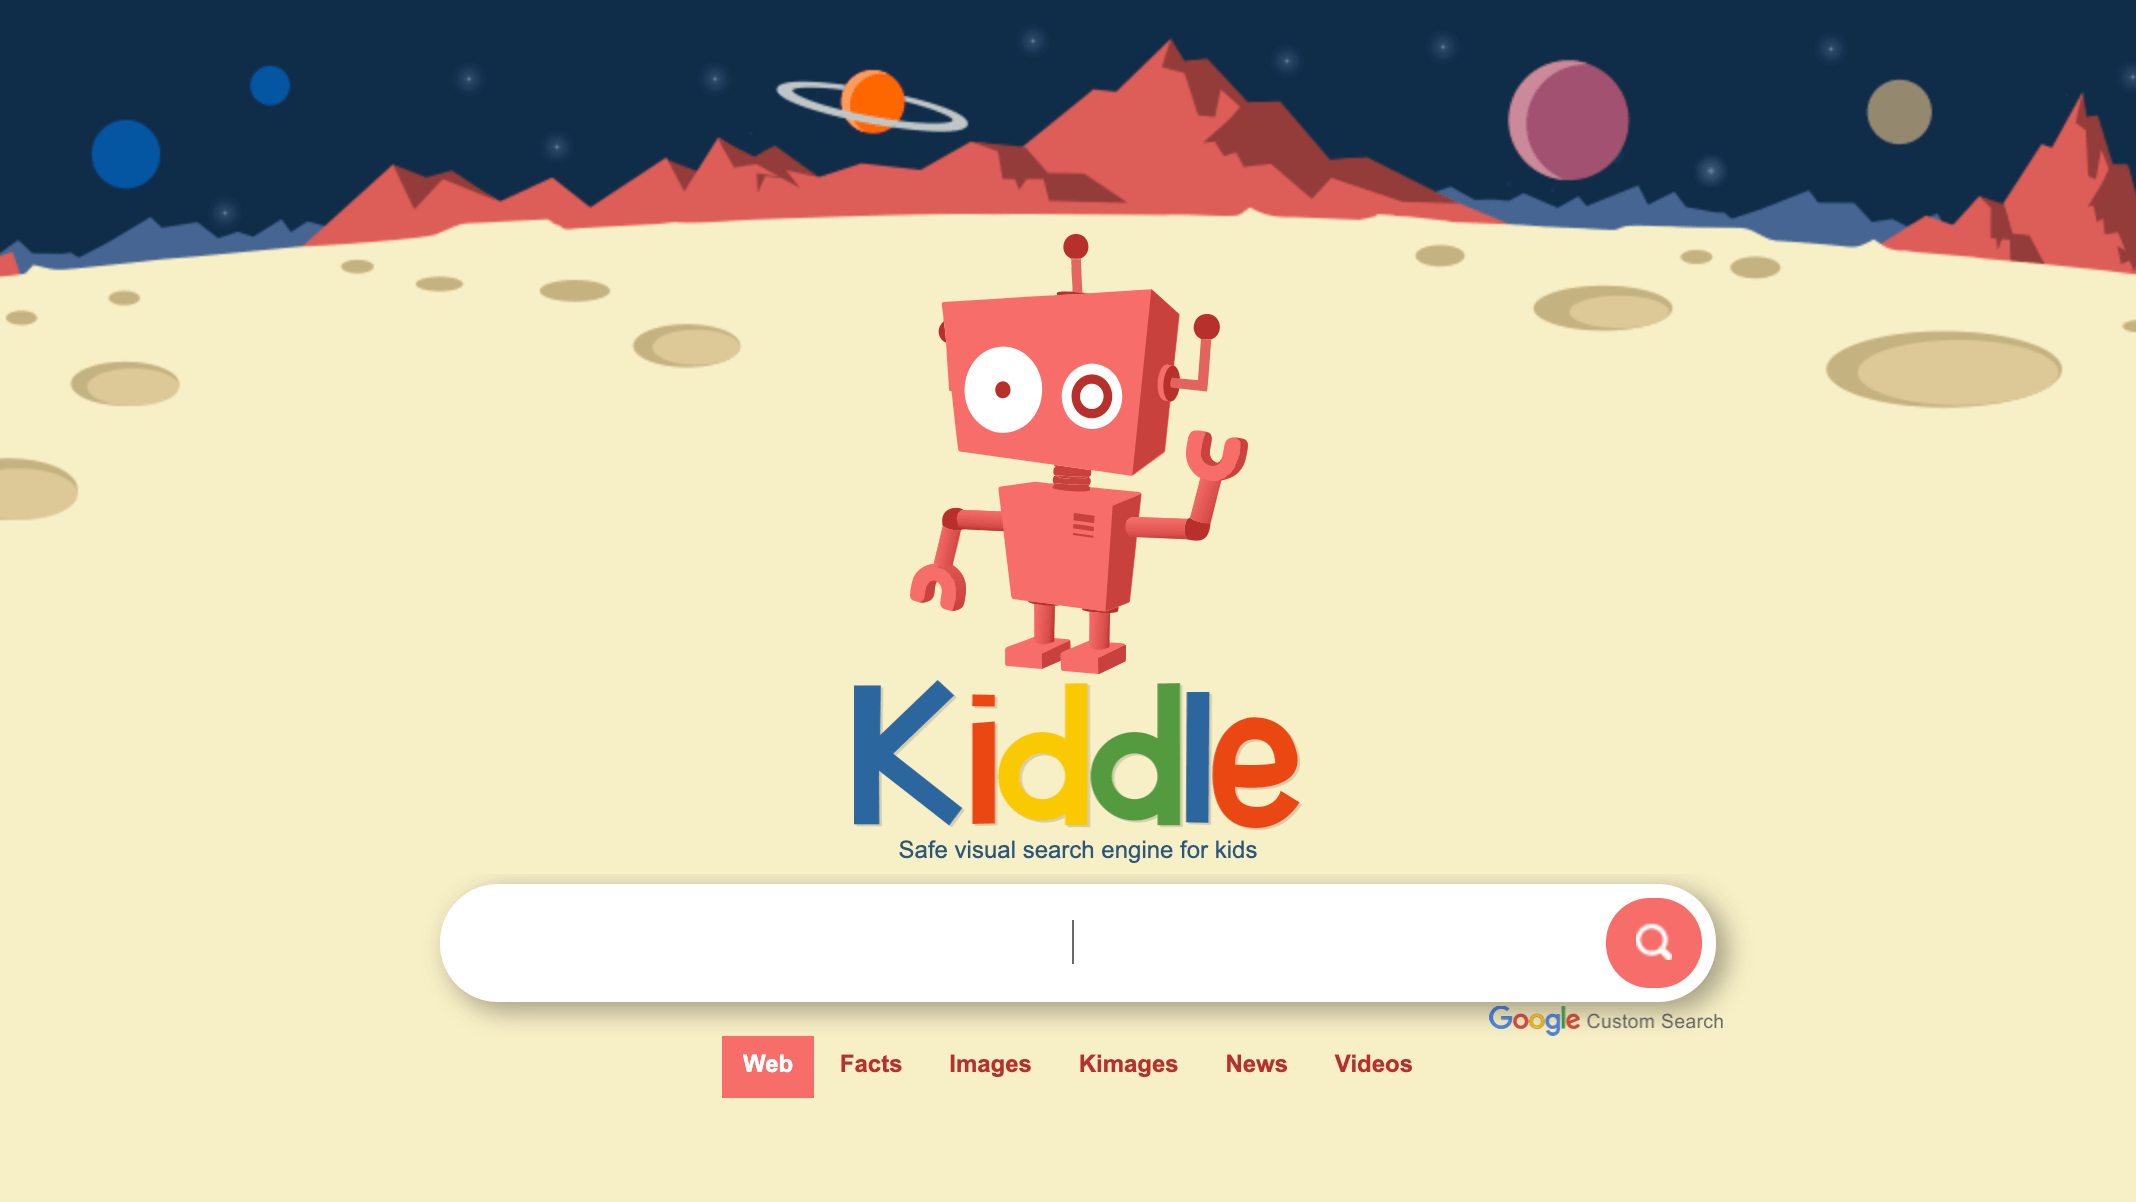 kiddle